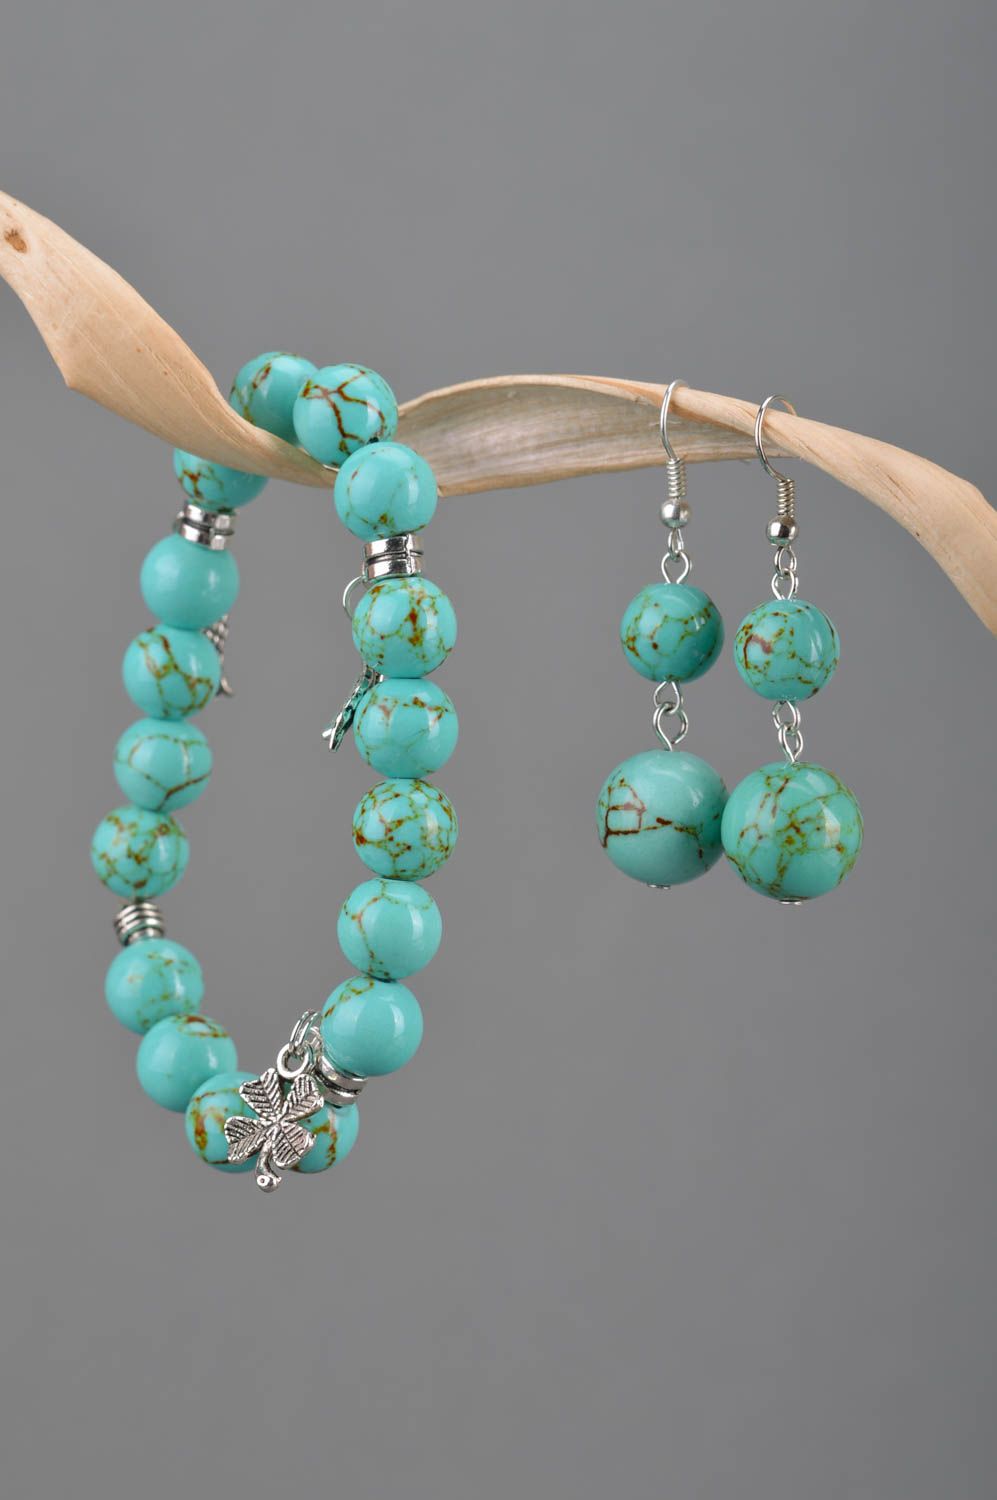 Handmade turquoise beaded jewelry set wrist bracelet with charms and earrings photo 1